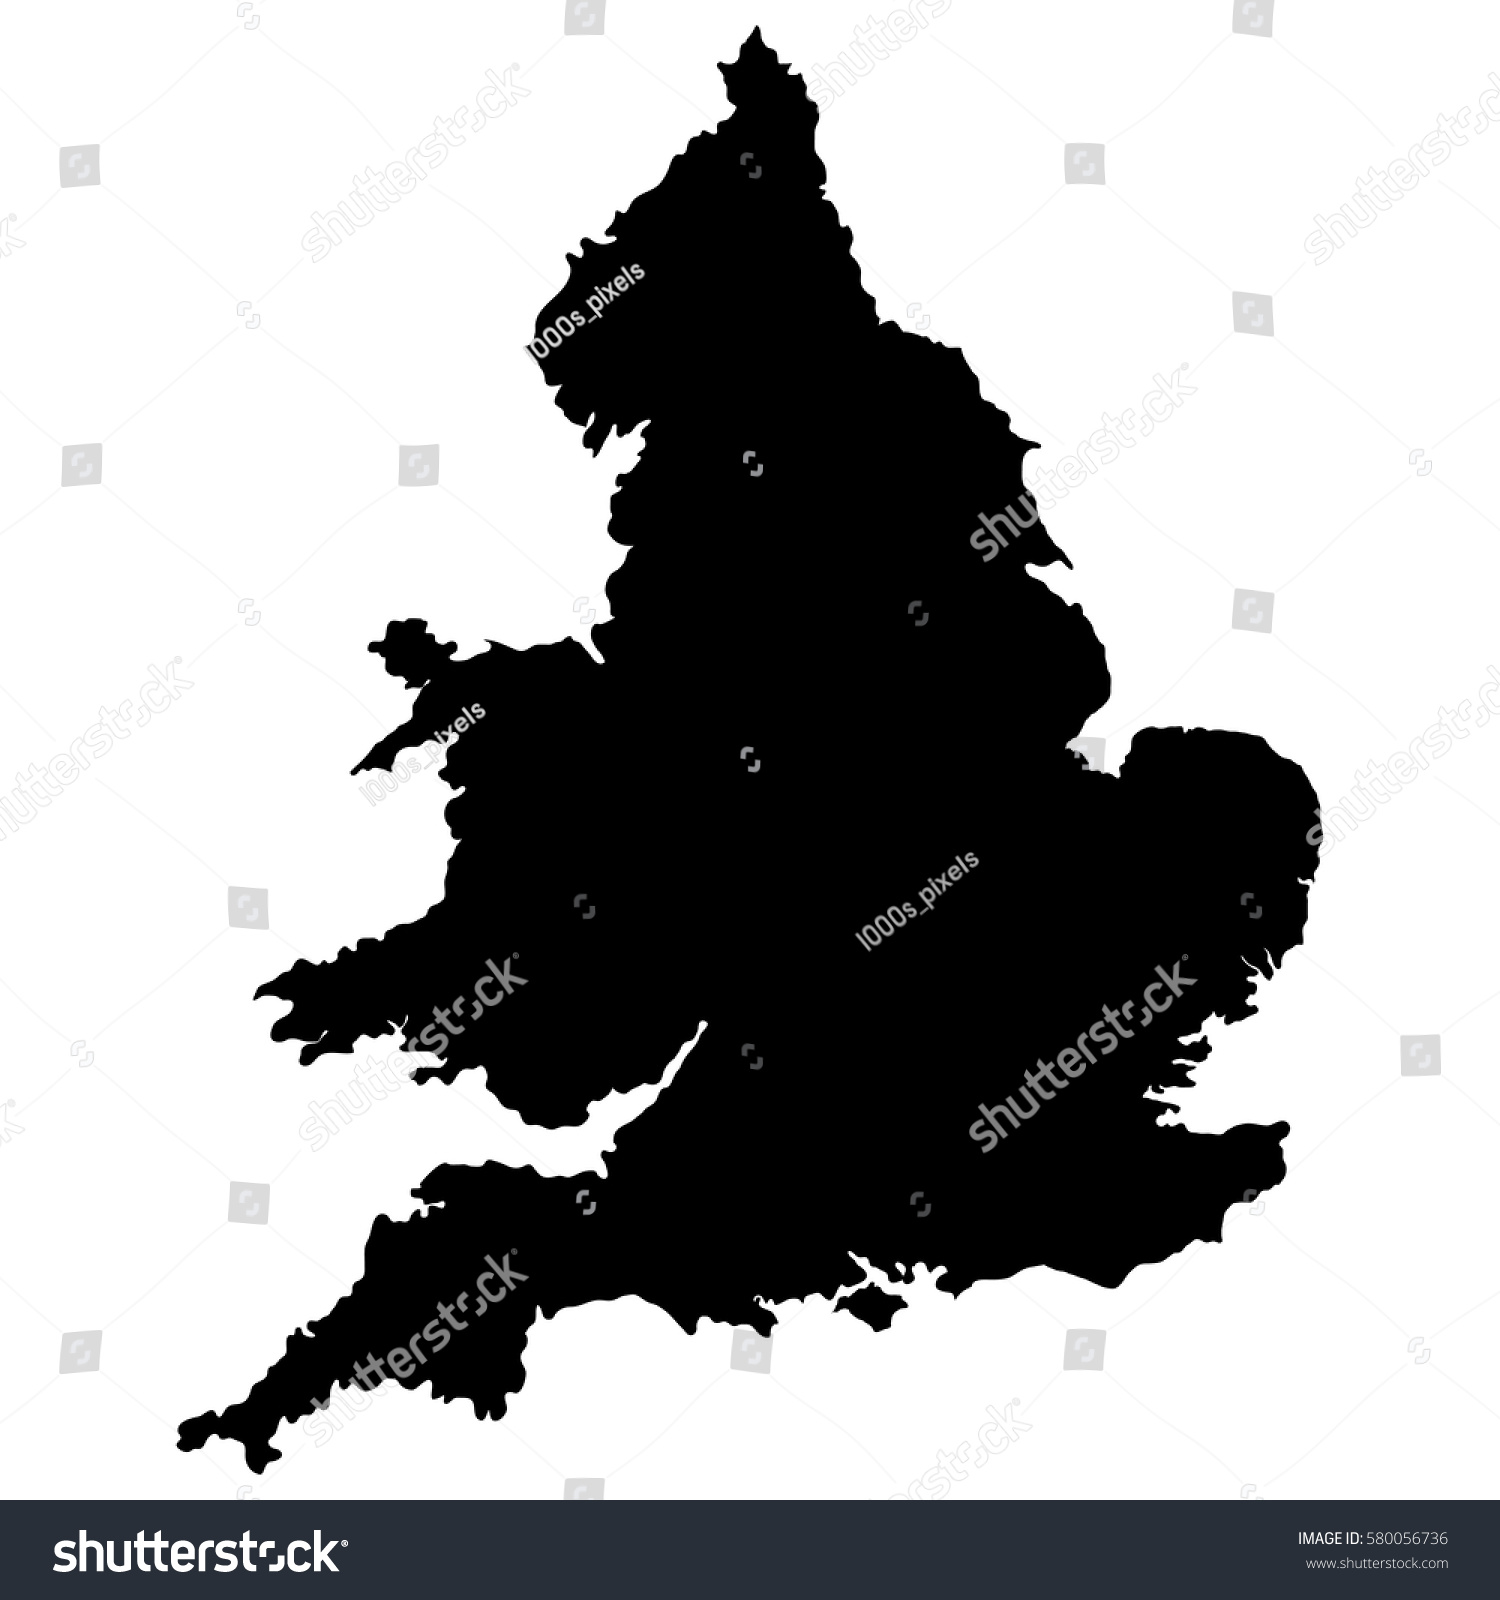 Edit Photos Free Online - England map | Shutterstock Editor